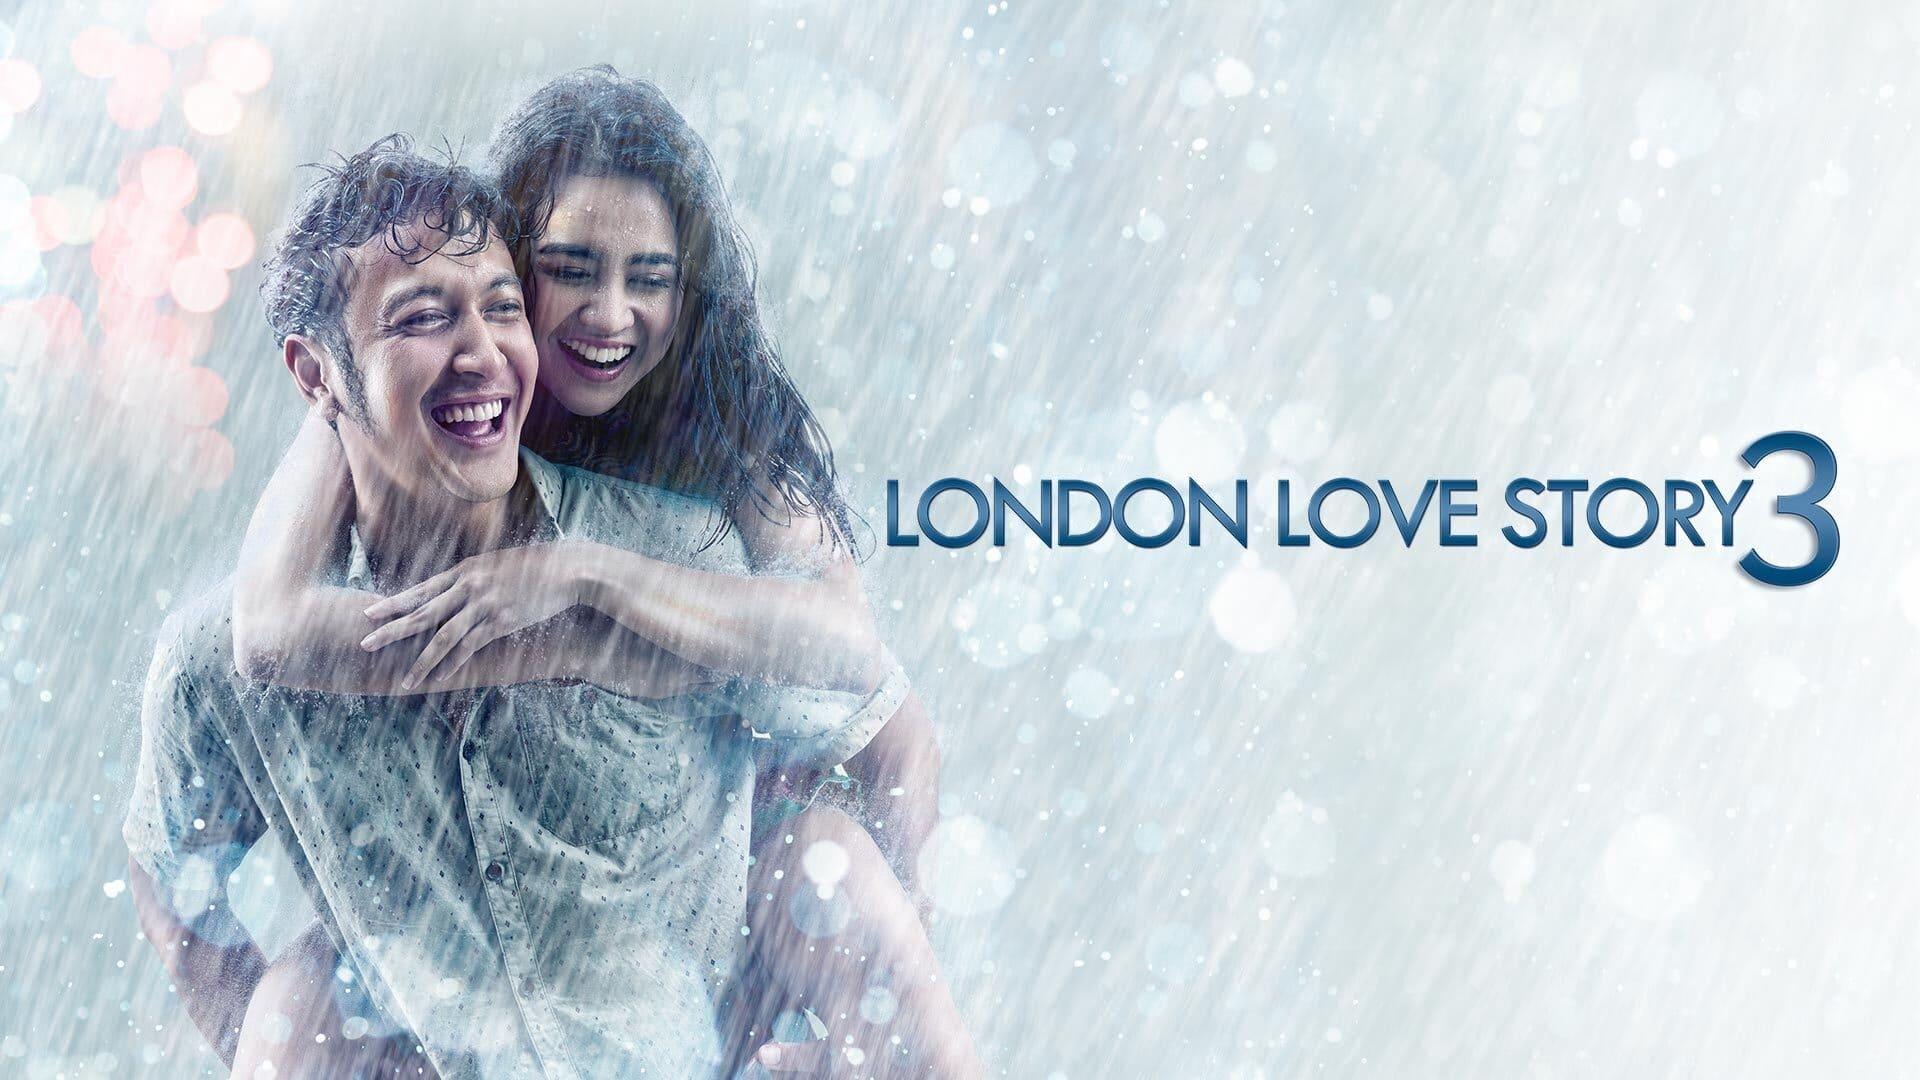 London Love Story 3 backdrop